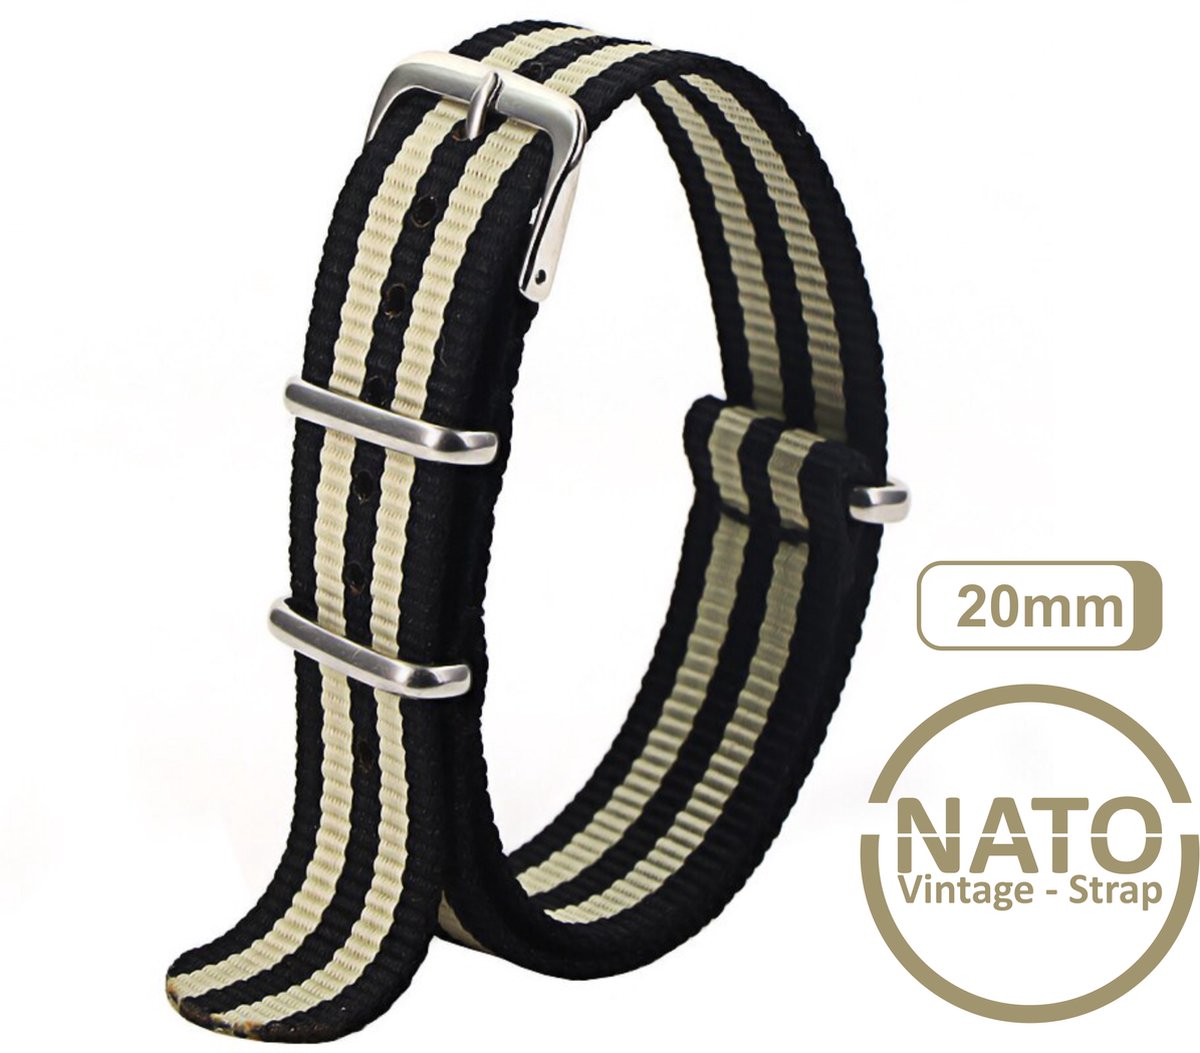 20mm Premium Nato Strap Zwart Créme gestreept - Vintage James Bond - Nato Strap collectie - Mannen - Horlogeband - 20 mm bandbreedte voor oa. Seiko Rolex Omega Casio en Citizen